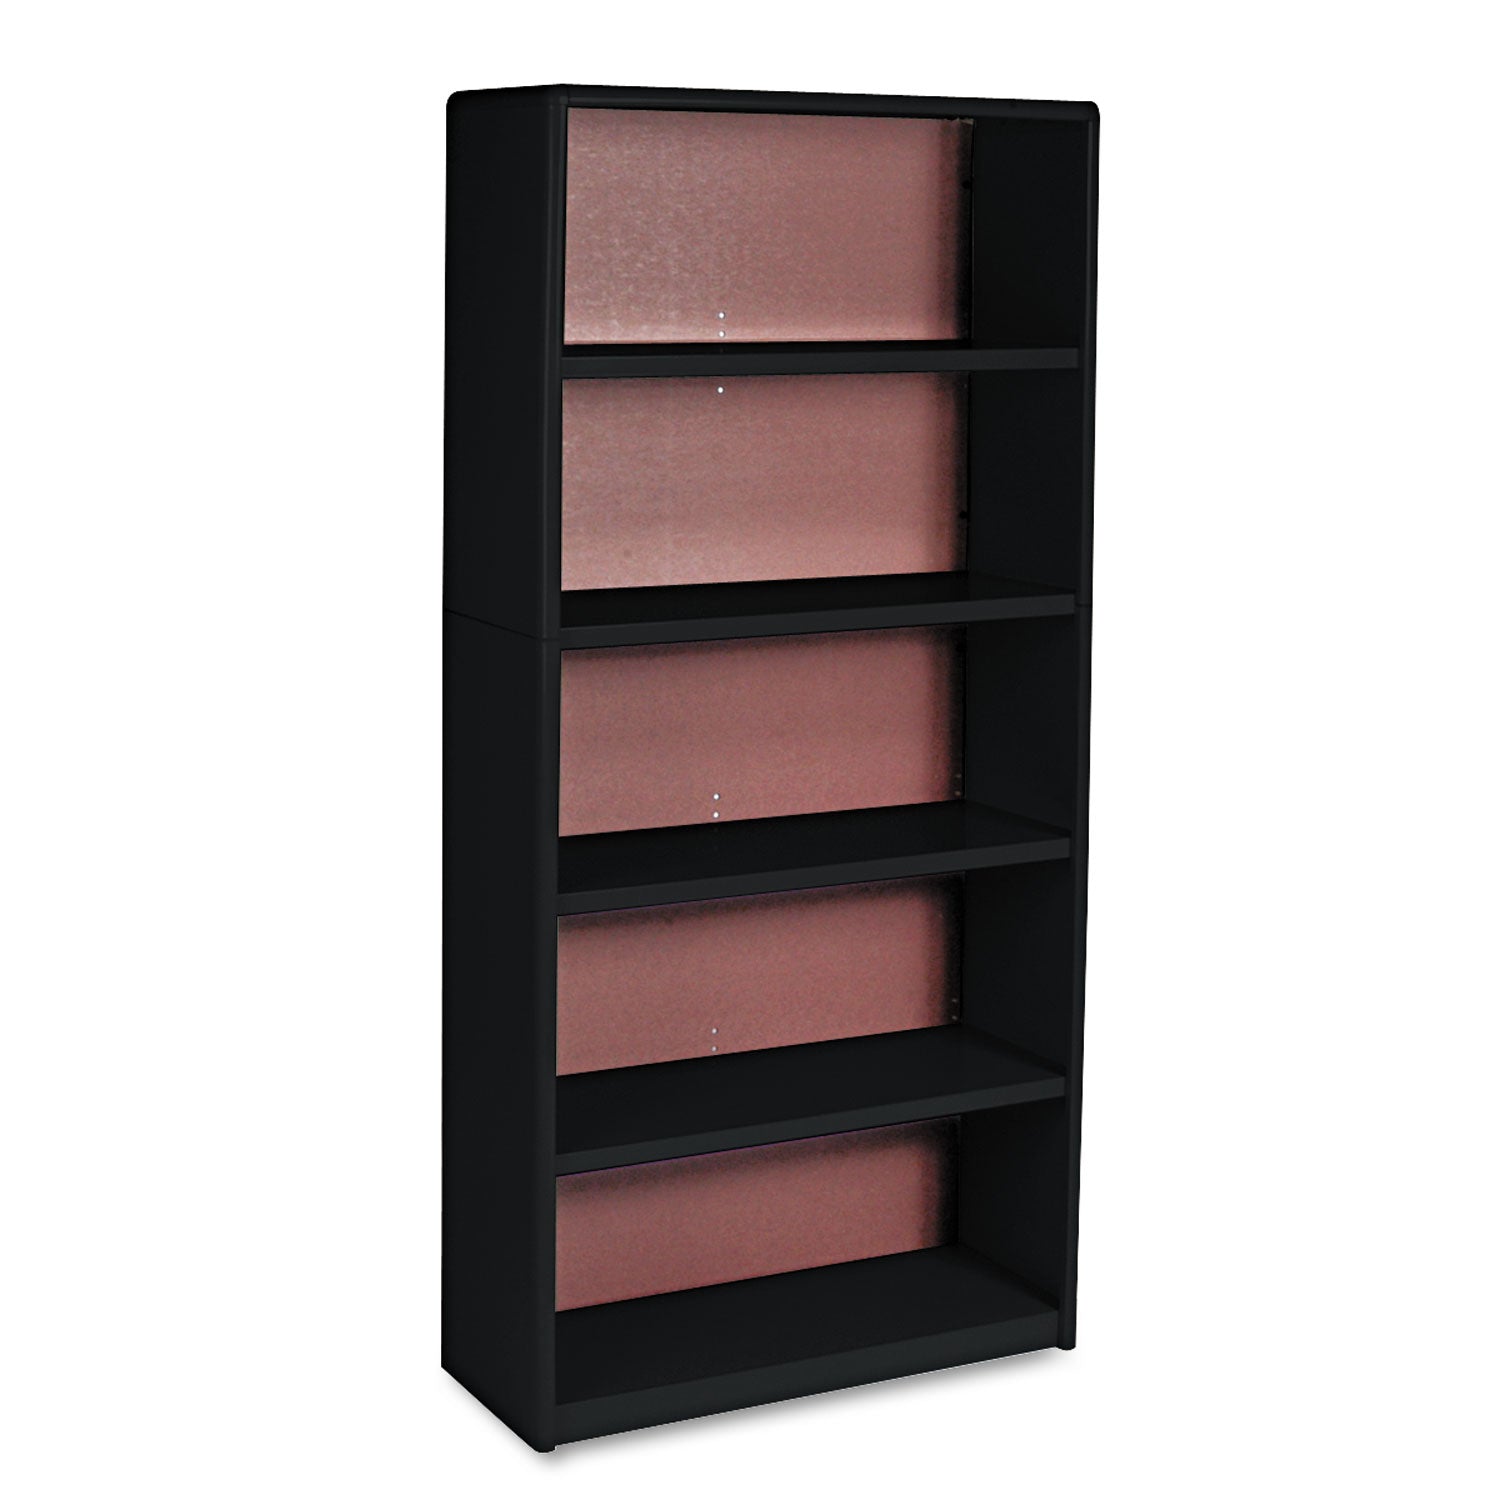 Safco ValueMate Bookcase - 31.8" x 13.5" x 67" - 5 x Shelf(ves) - Black - Steel, Fiberboard, Plastic - Assembly Required - 1